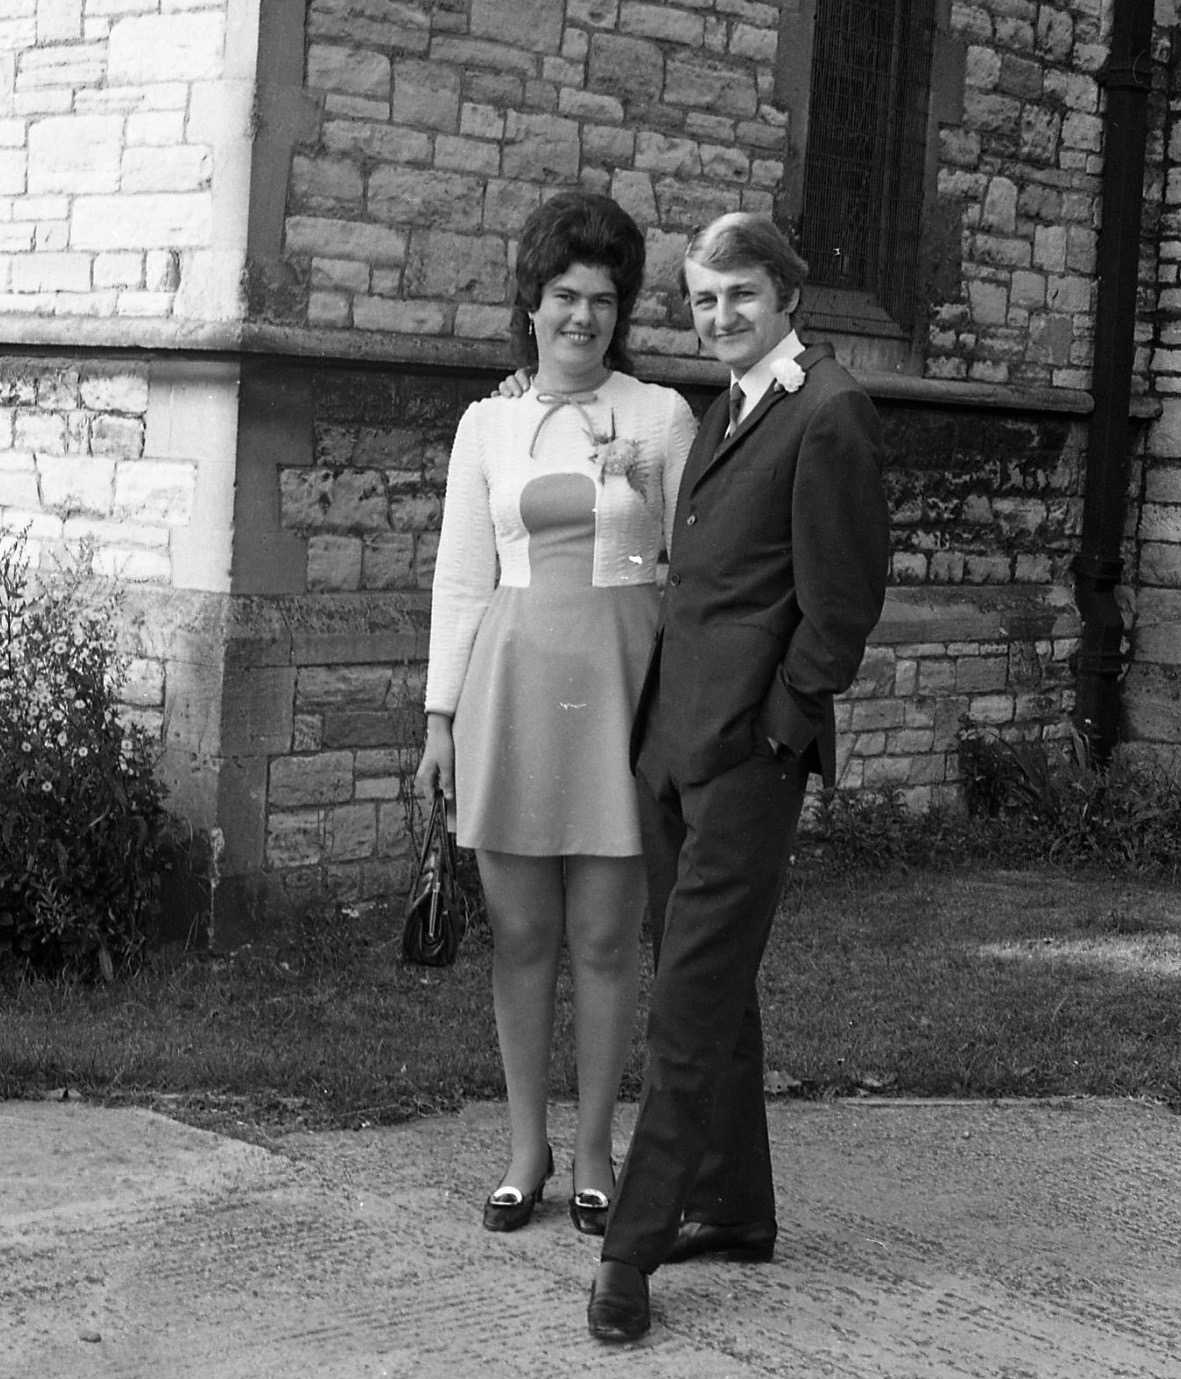 1972 wedding snapshots retro found